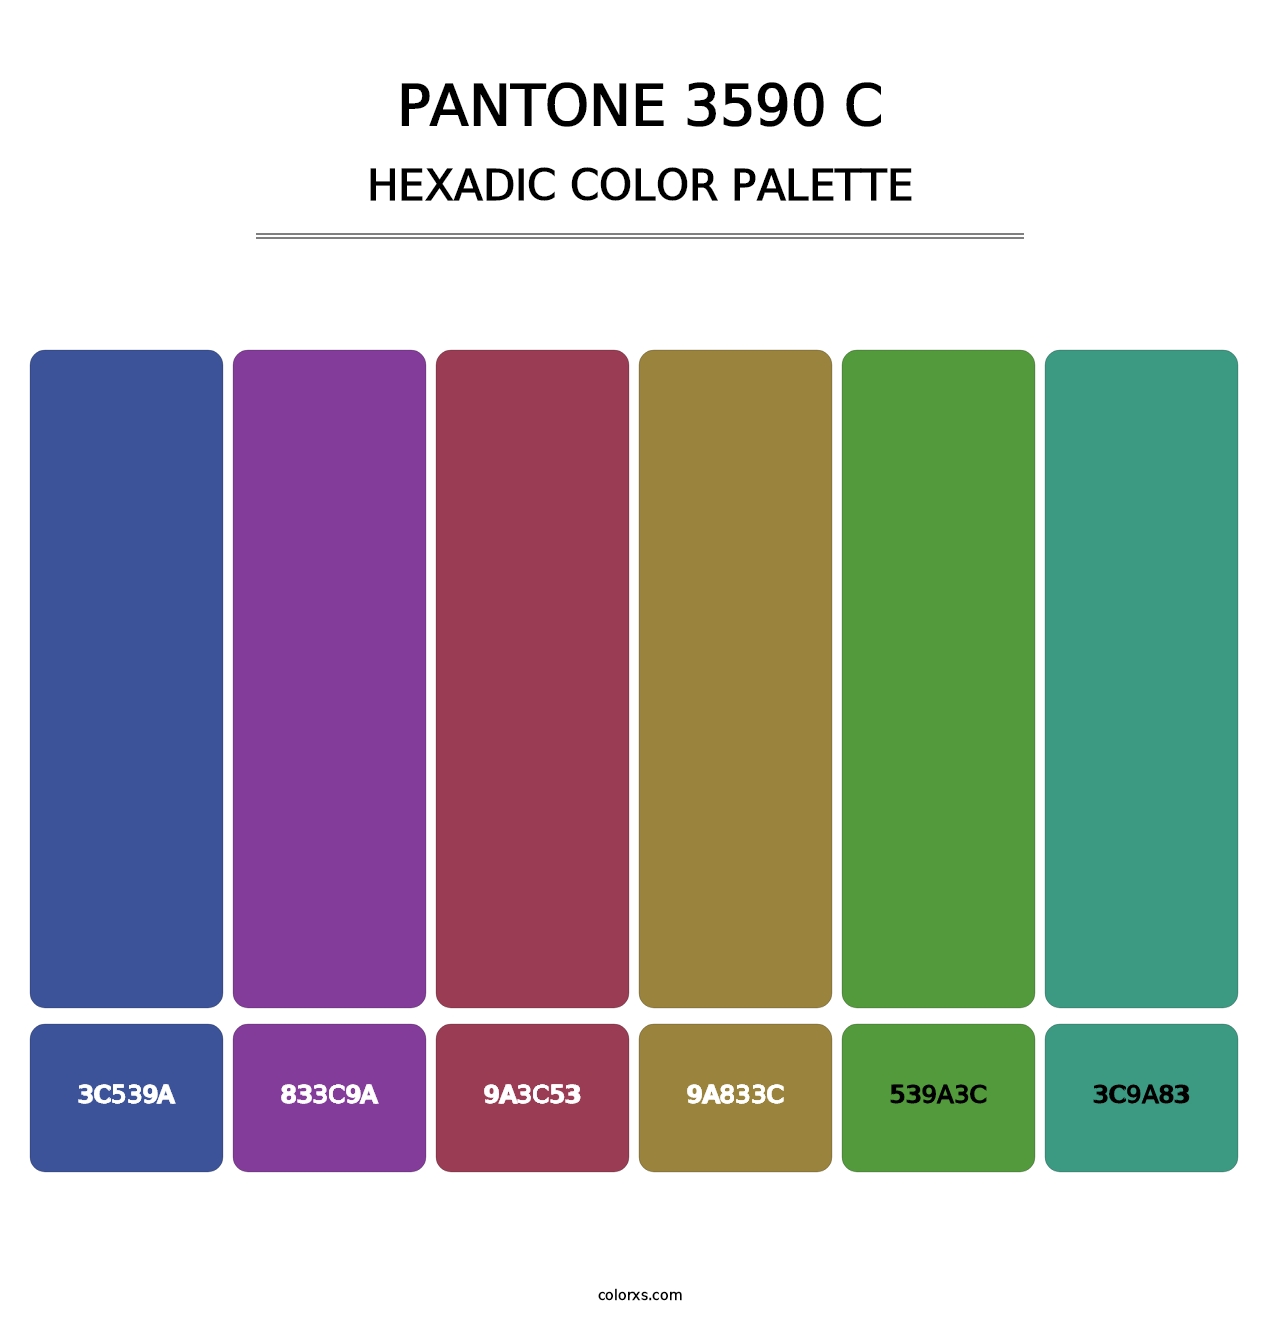 PANTONE 3590 C - Hexadic Color Palette